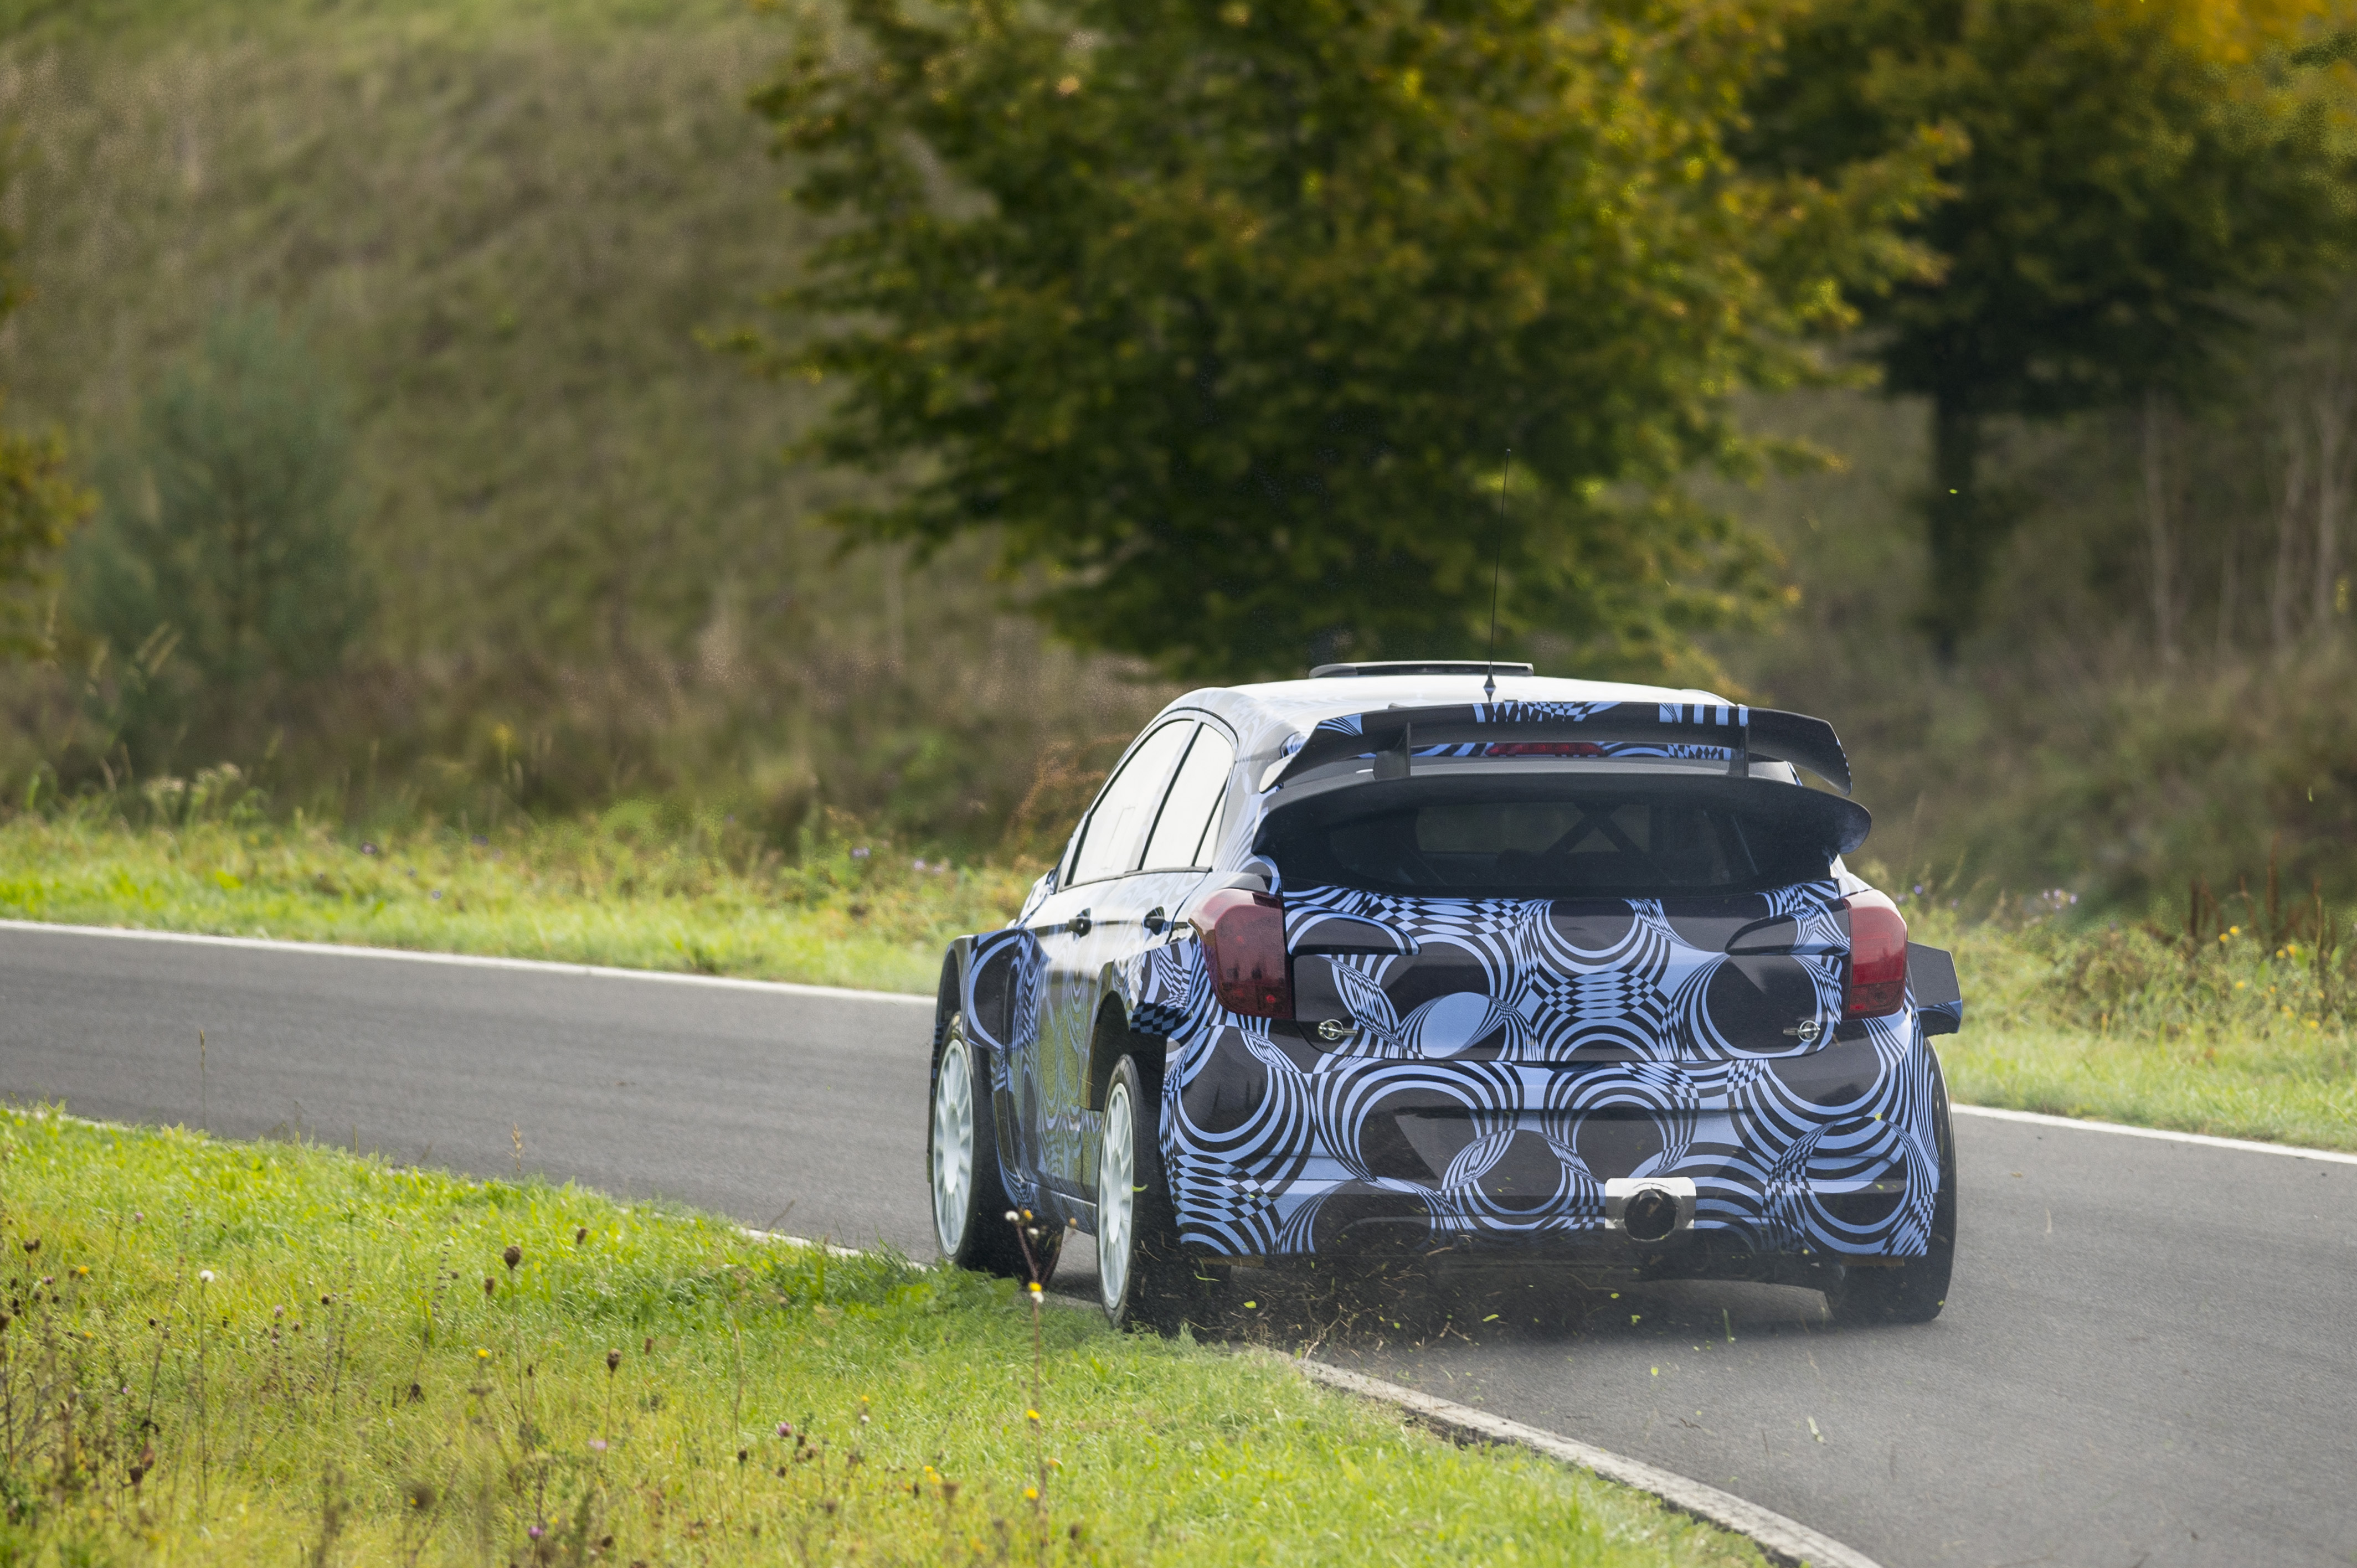 Hyundai Motorsport Begin Testing Next Season WRC Car based on New Generation i20